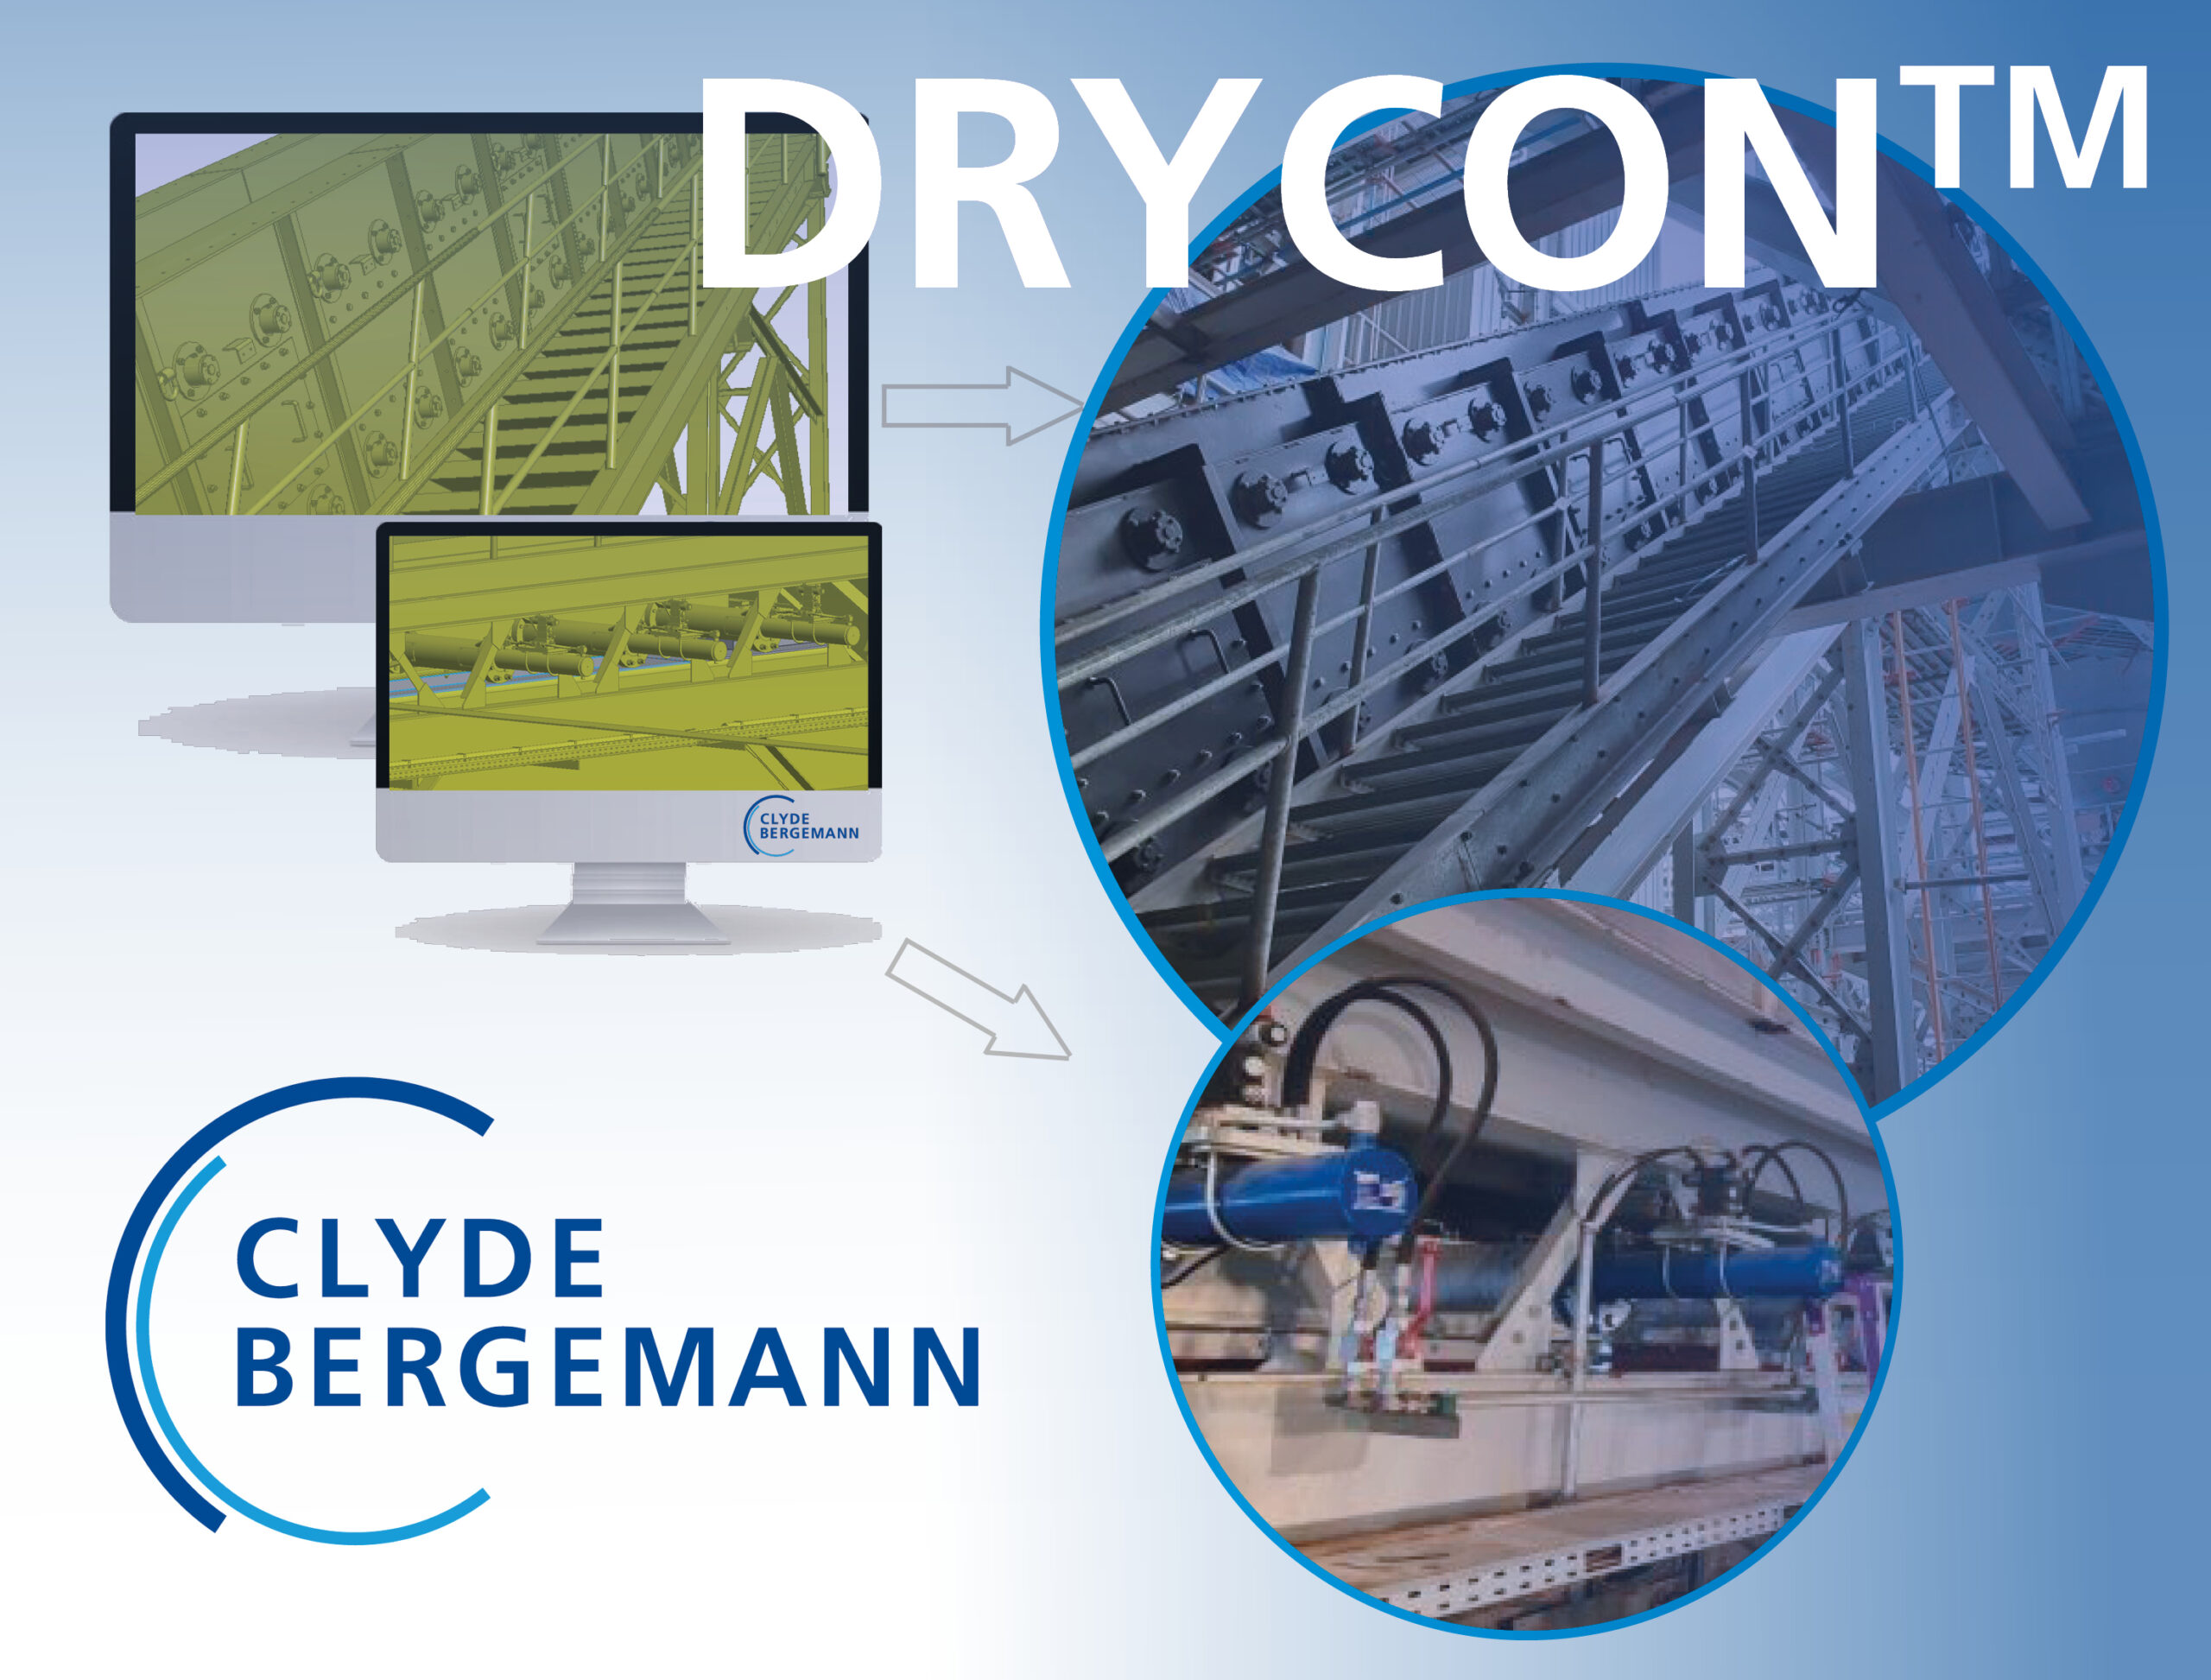 DRYCON™ 底渣处理系统 – 从规划到施工，刷新最快纪录